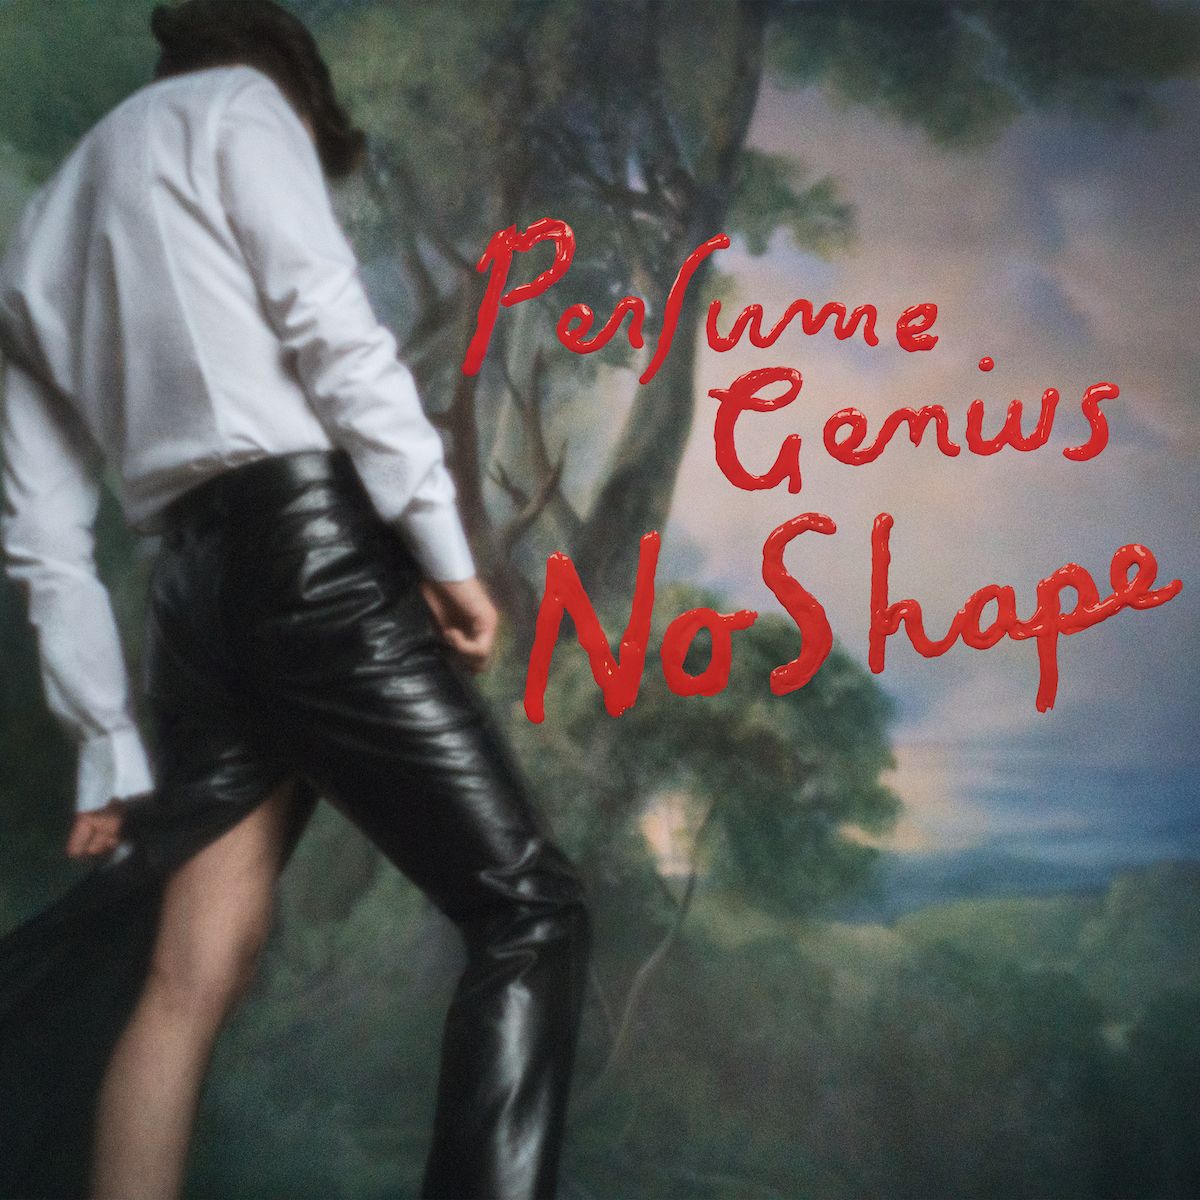 Perfume Genius "No shape" Limited Clear LP